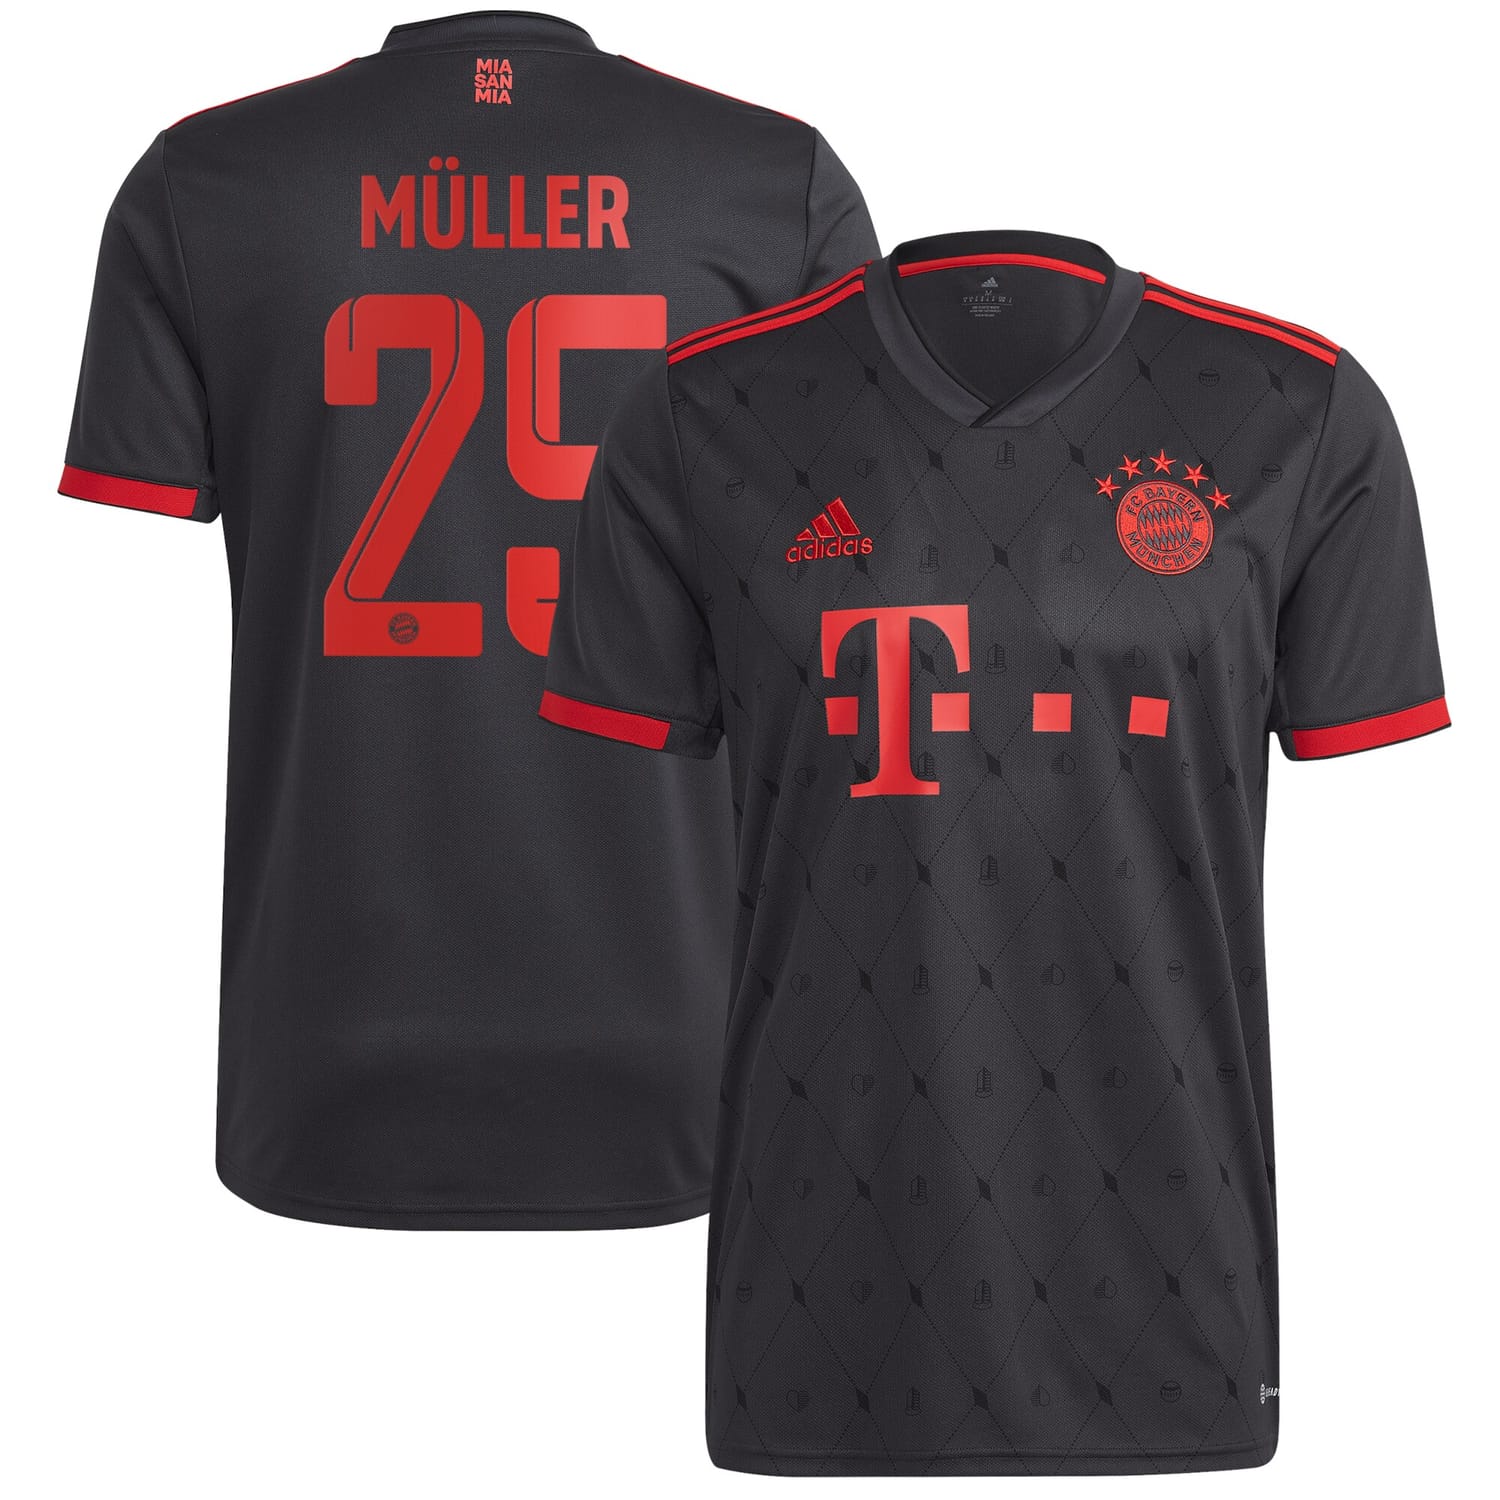 Bundesliga Bayern Munich Third Jersey Shirt Charcoal 2022-23 player Thomas Müller printing for Men